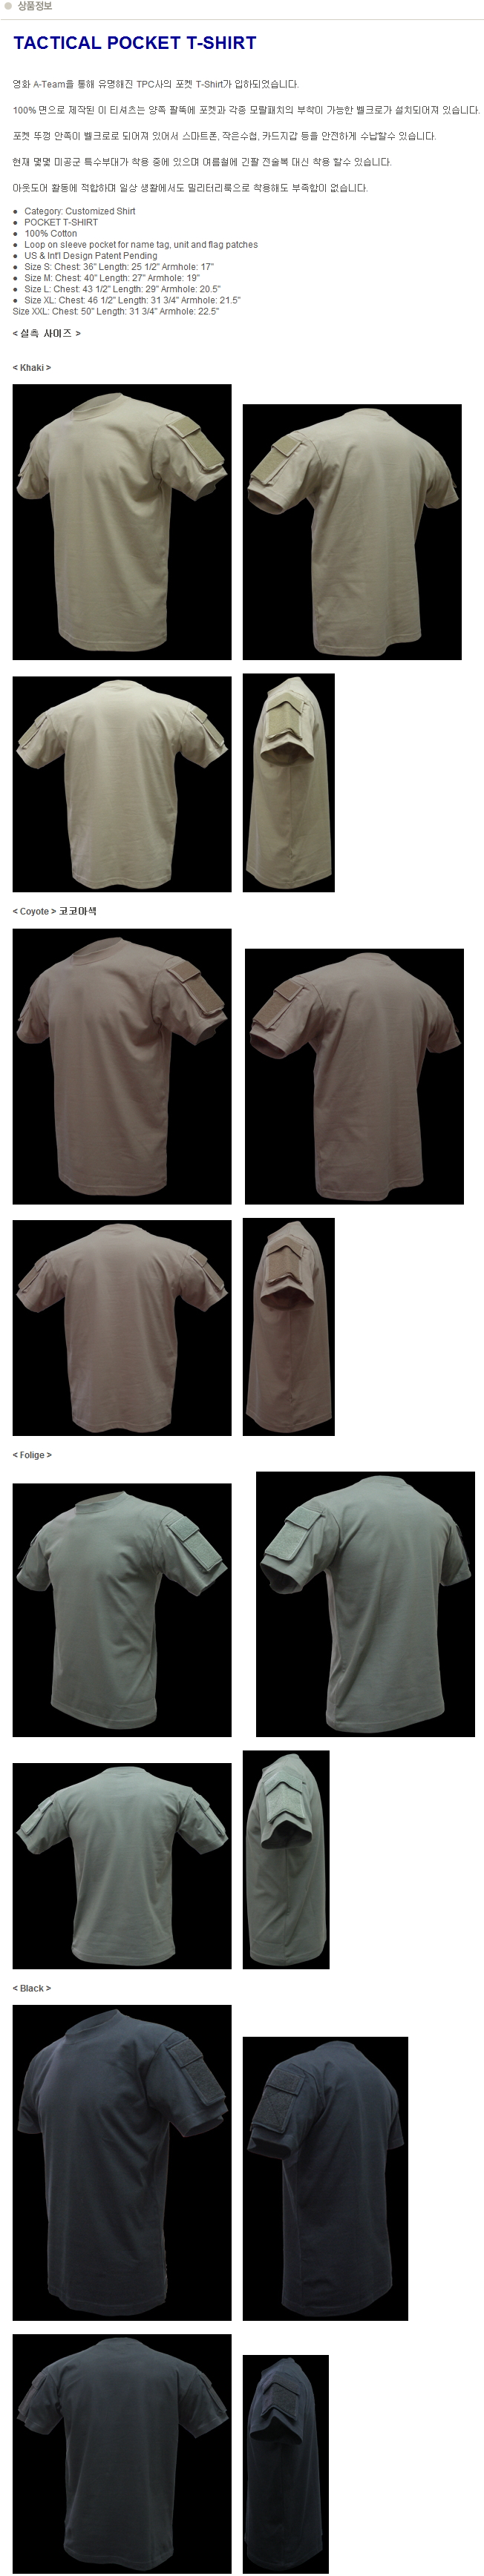 shirts-7-20120801_151403.jpg